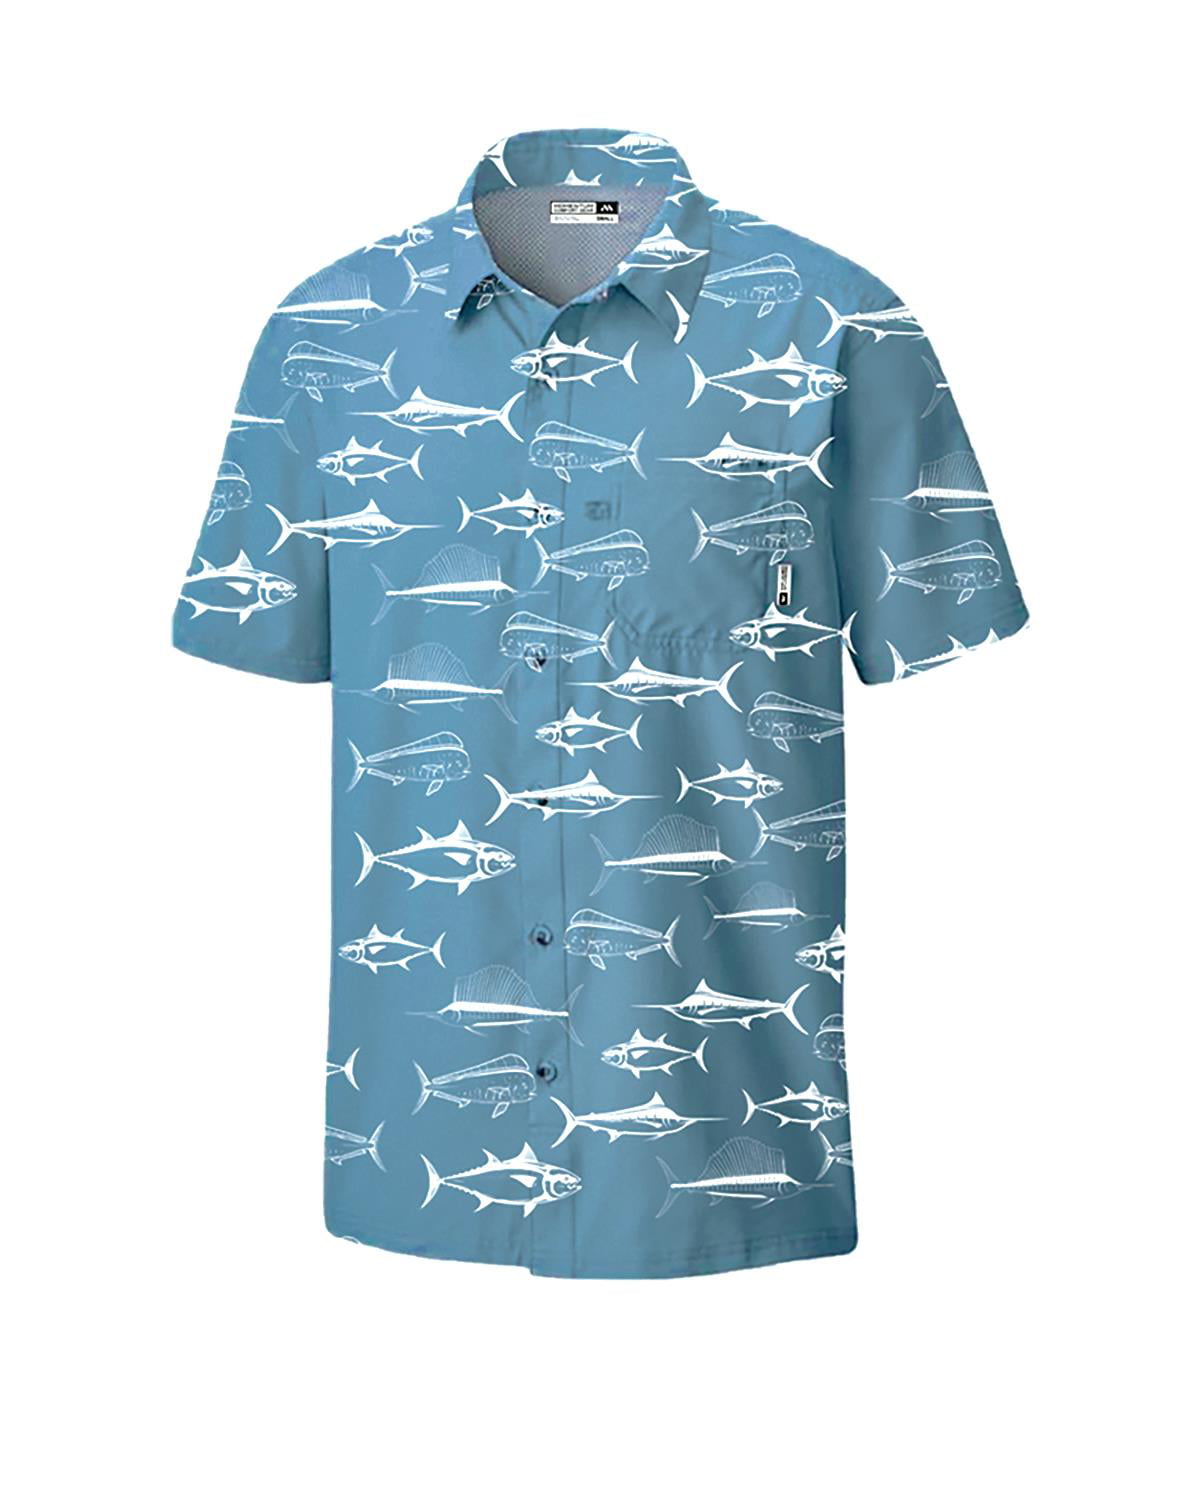 Mens Performance Short Sleeve Button Up Quick Dry Shirt 50+ UPF Fishing  Shirt, Slate Game Fish, Size: 3X, Momentum Comfort Gear 